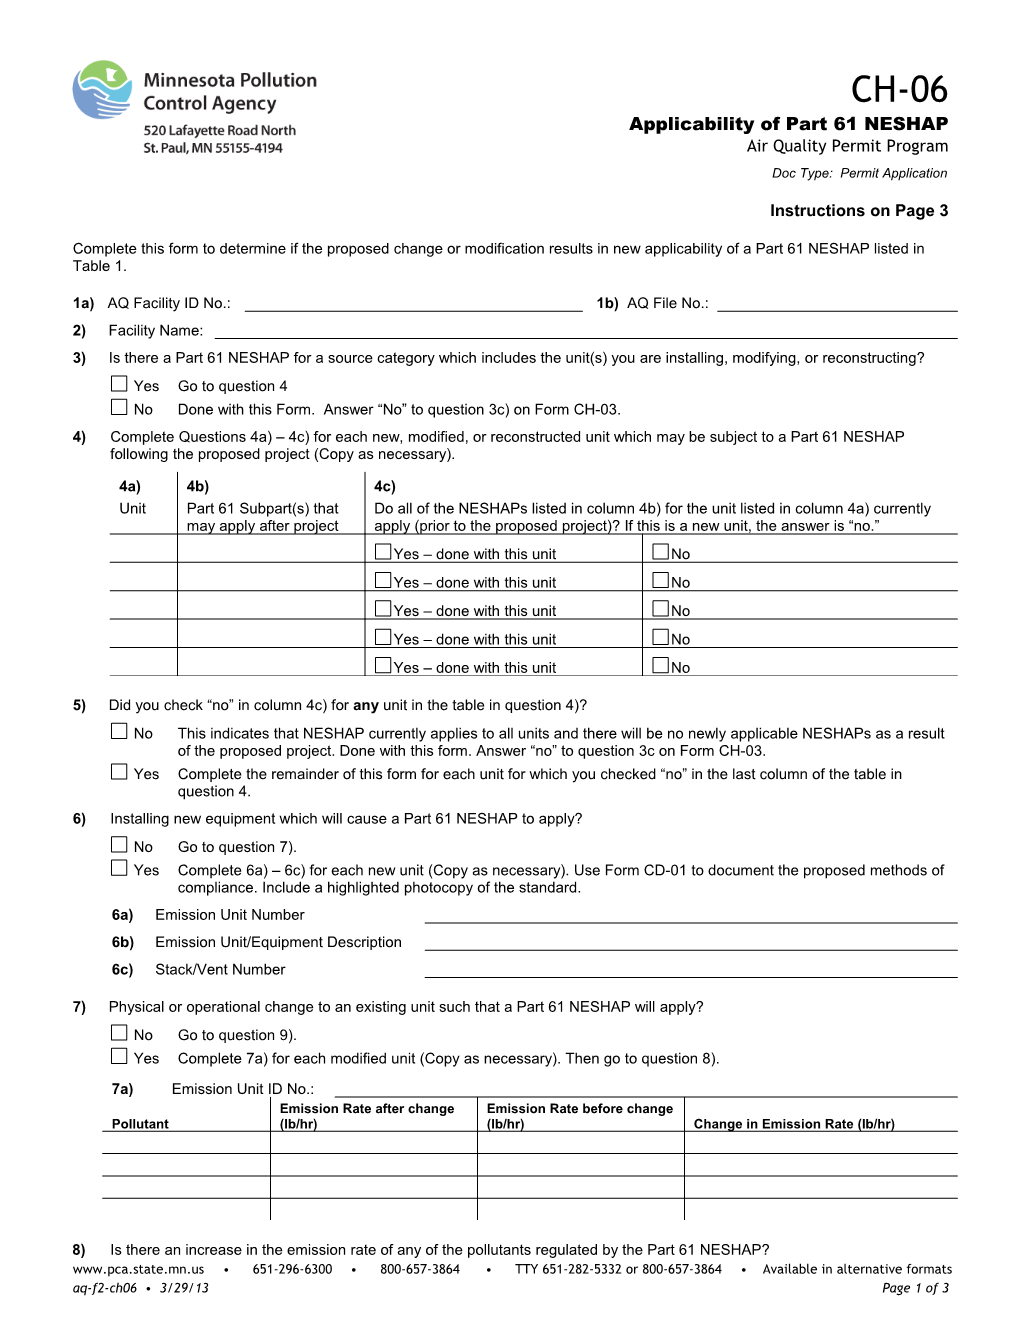 CH-06 Applicability of Part 61 NESHAP - Air Quality Permit Program - Form